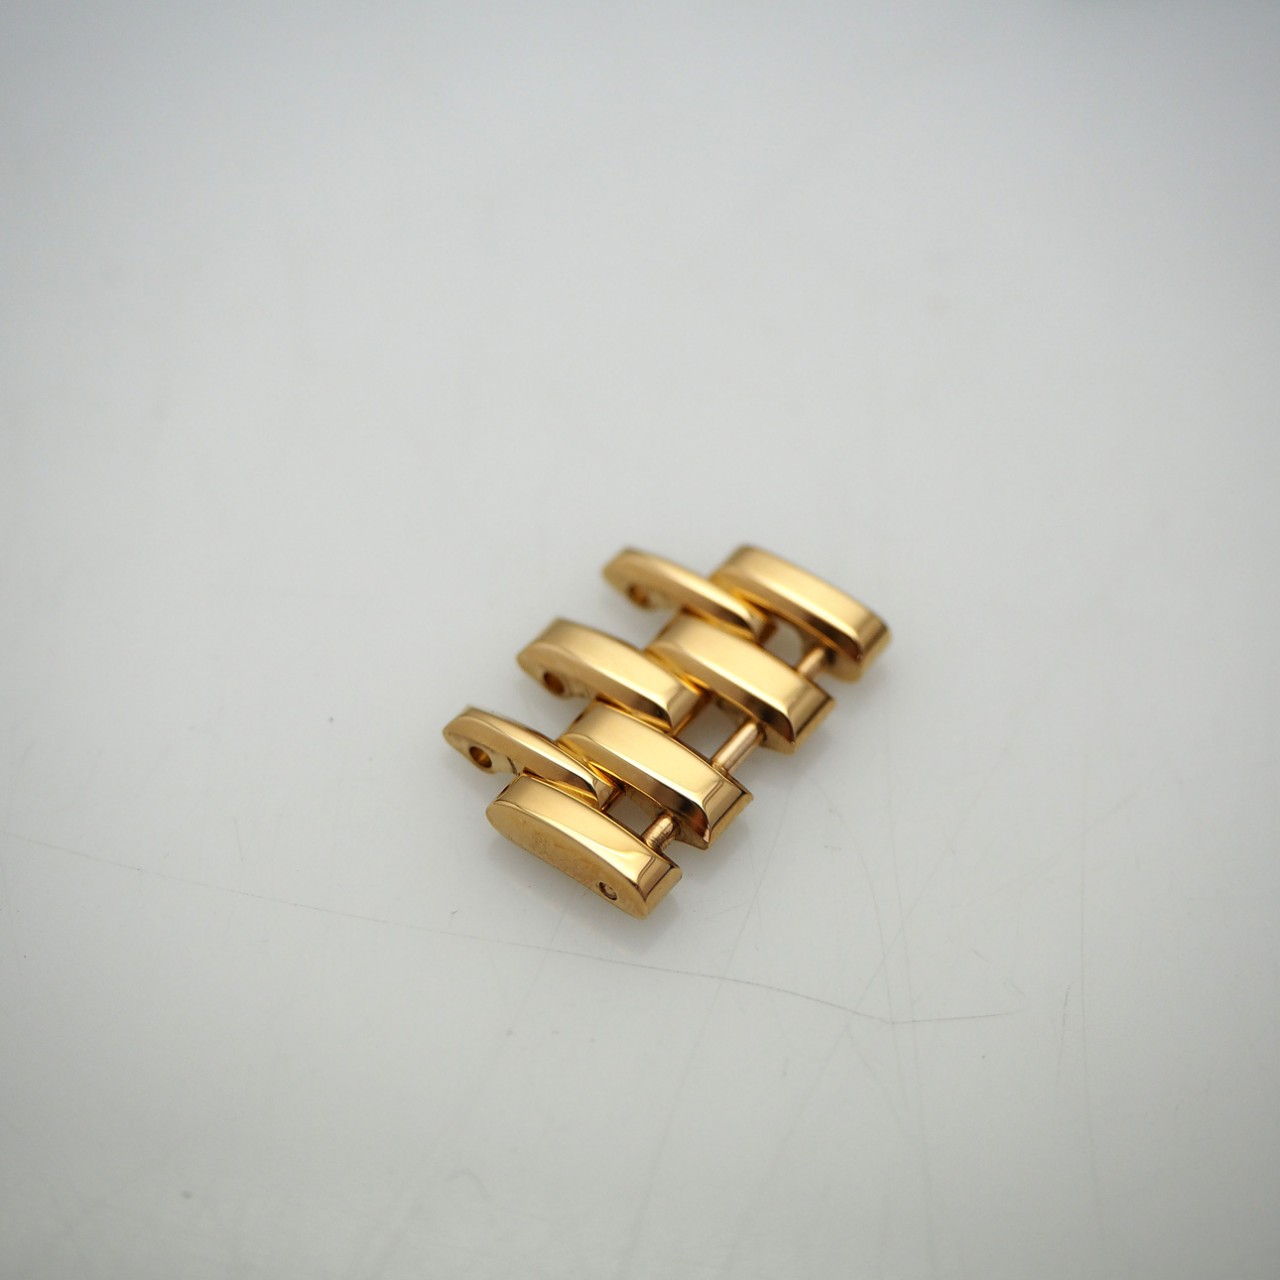 Jaeger LeCoultre Reverso Bandelement/ Glied/ Link , Gold 18k/750, 15 mm